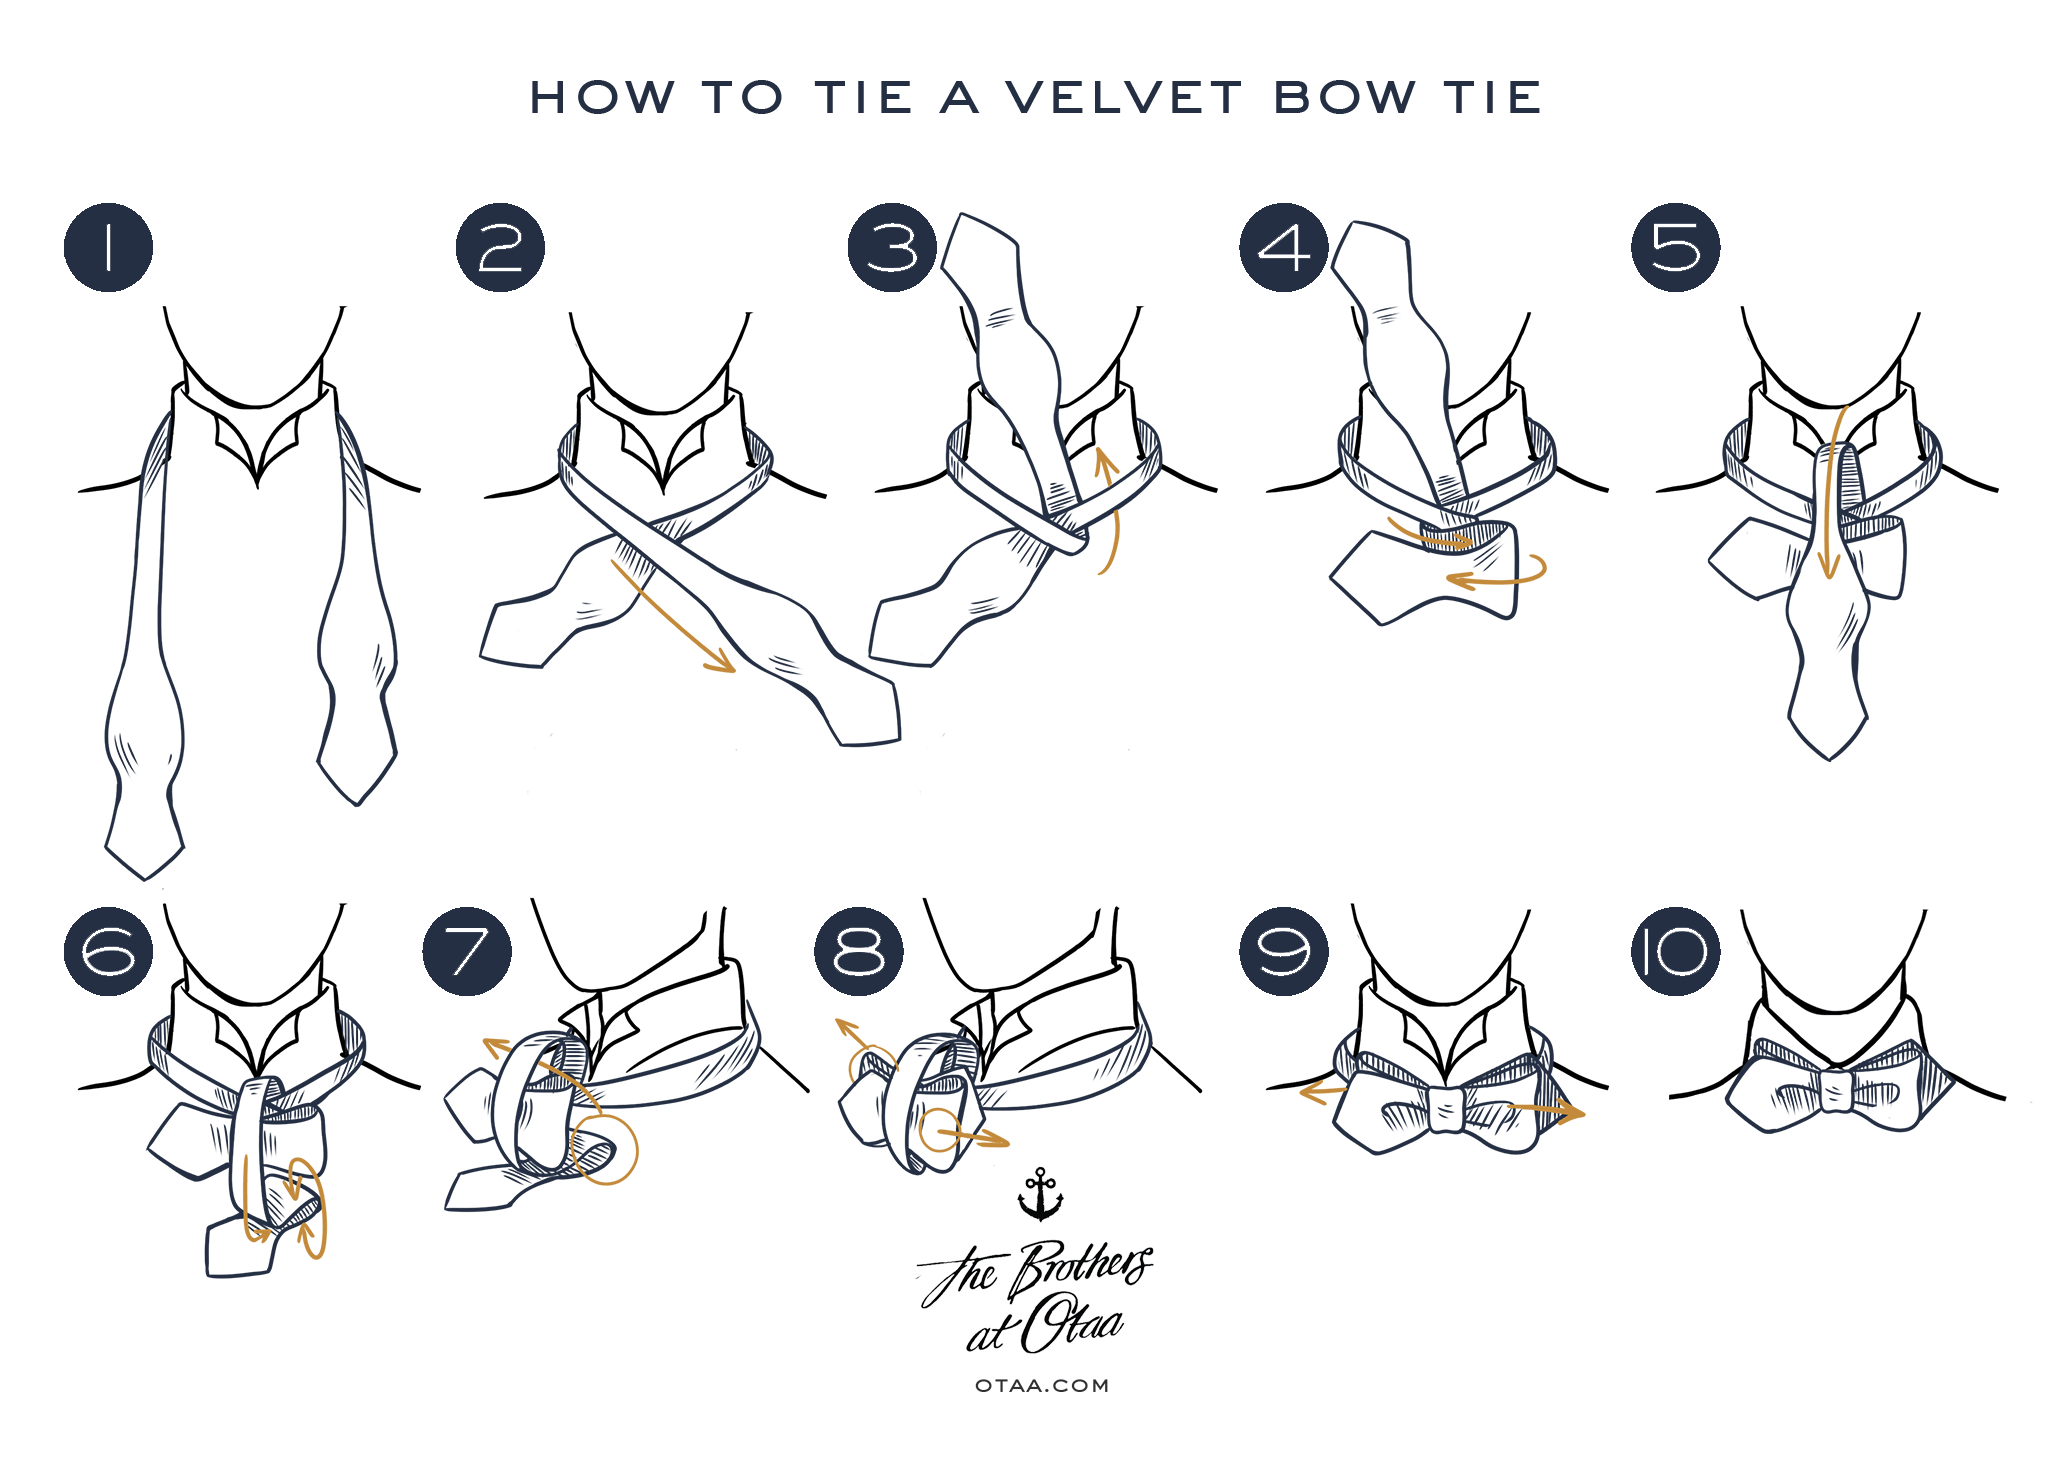 How To Tie a Velvet Bow Tie - steps